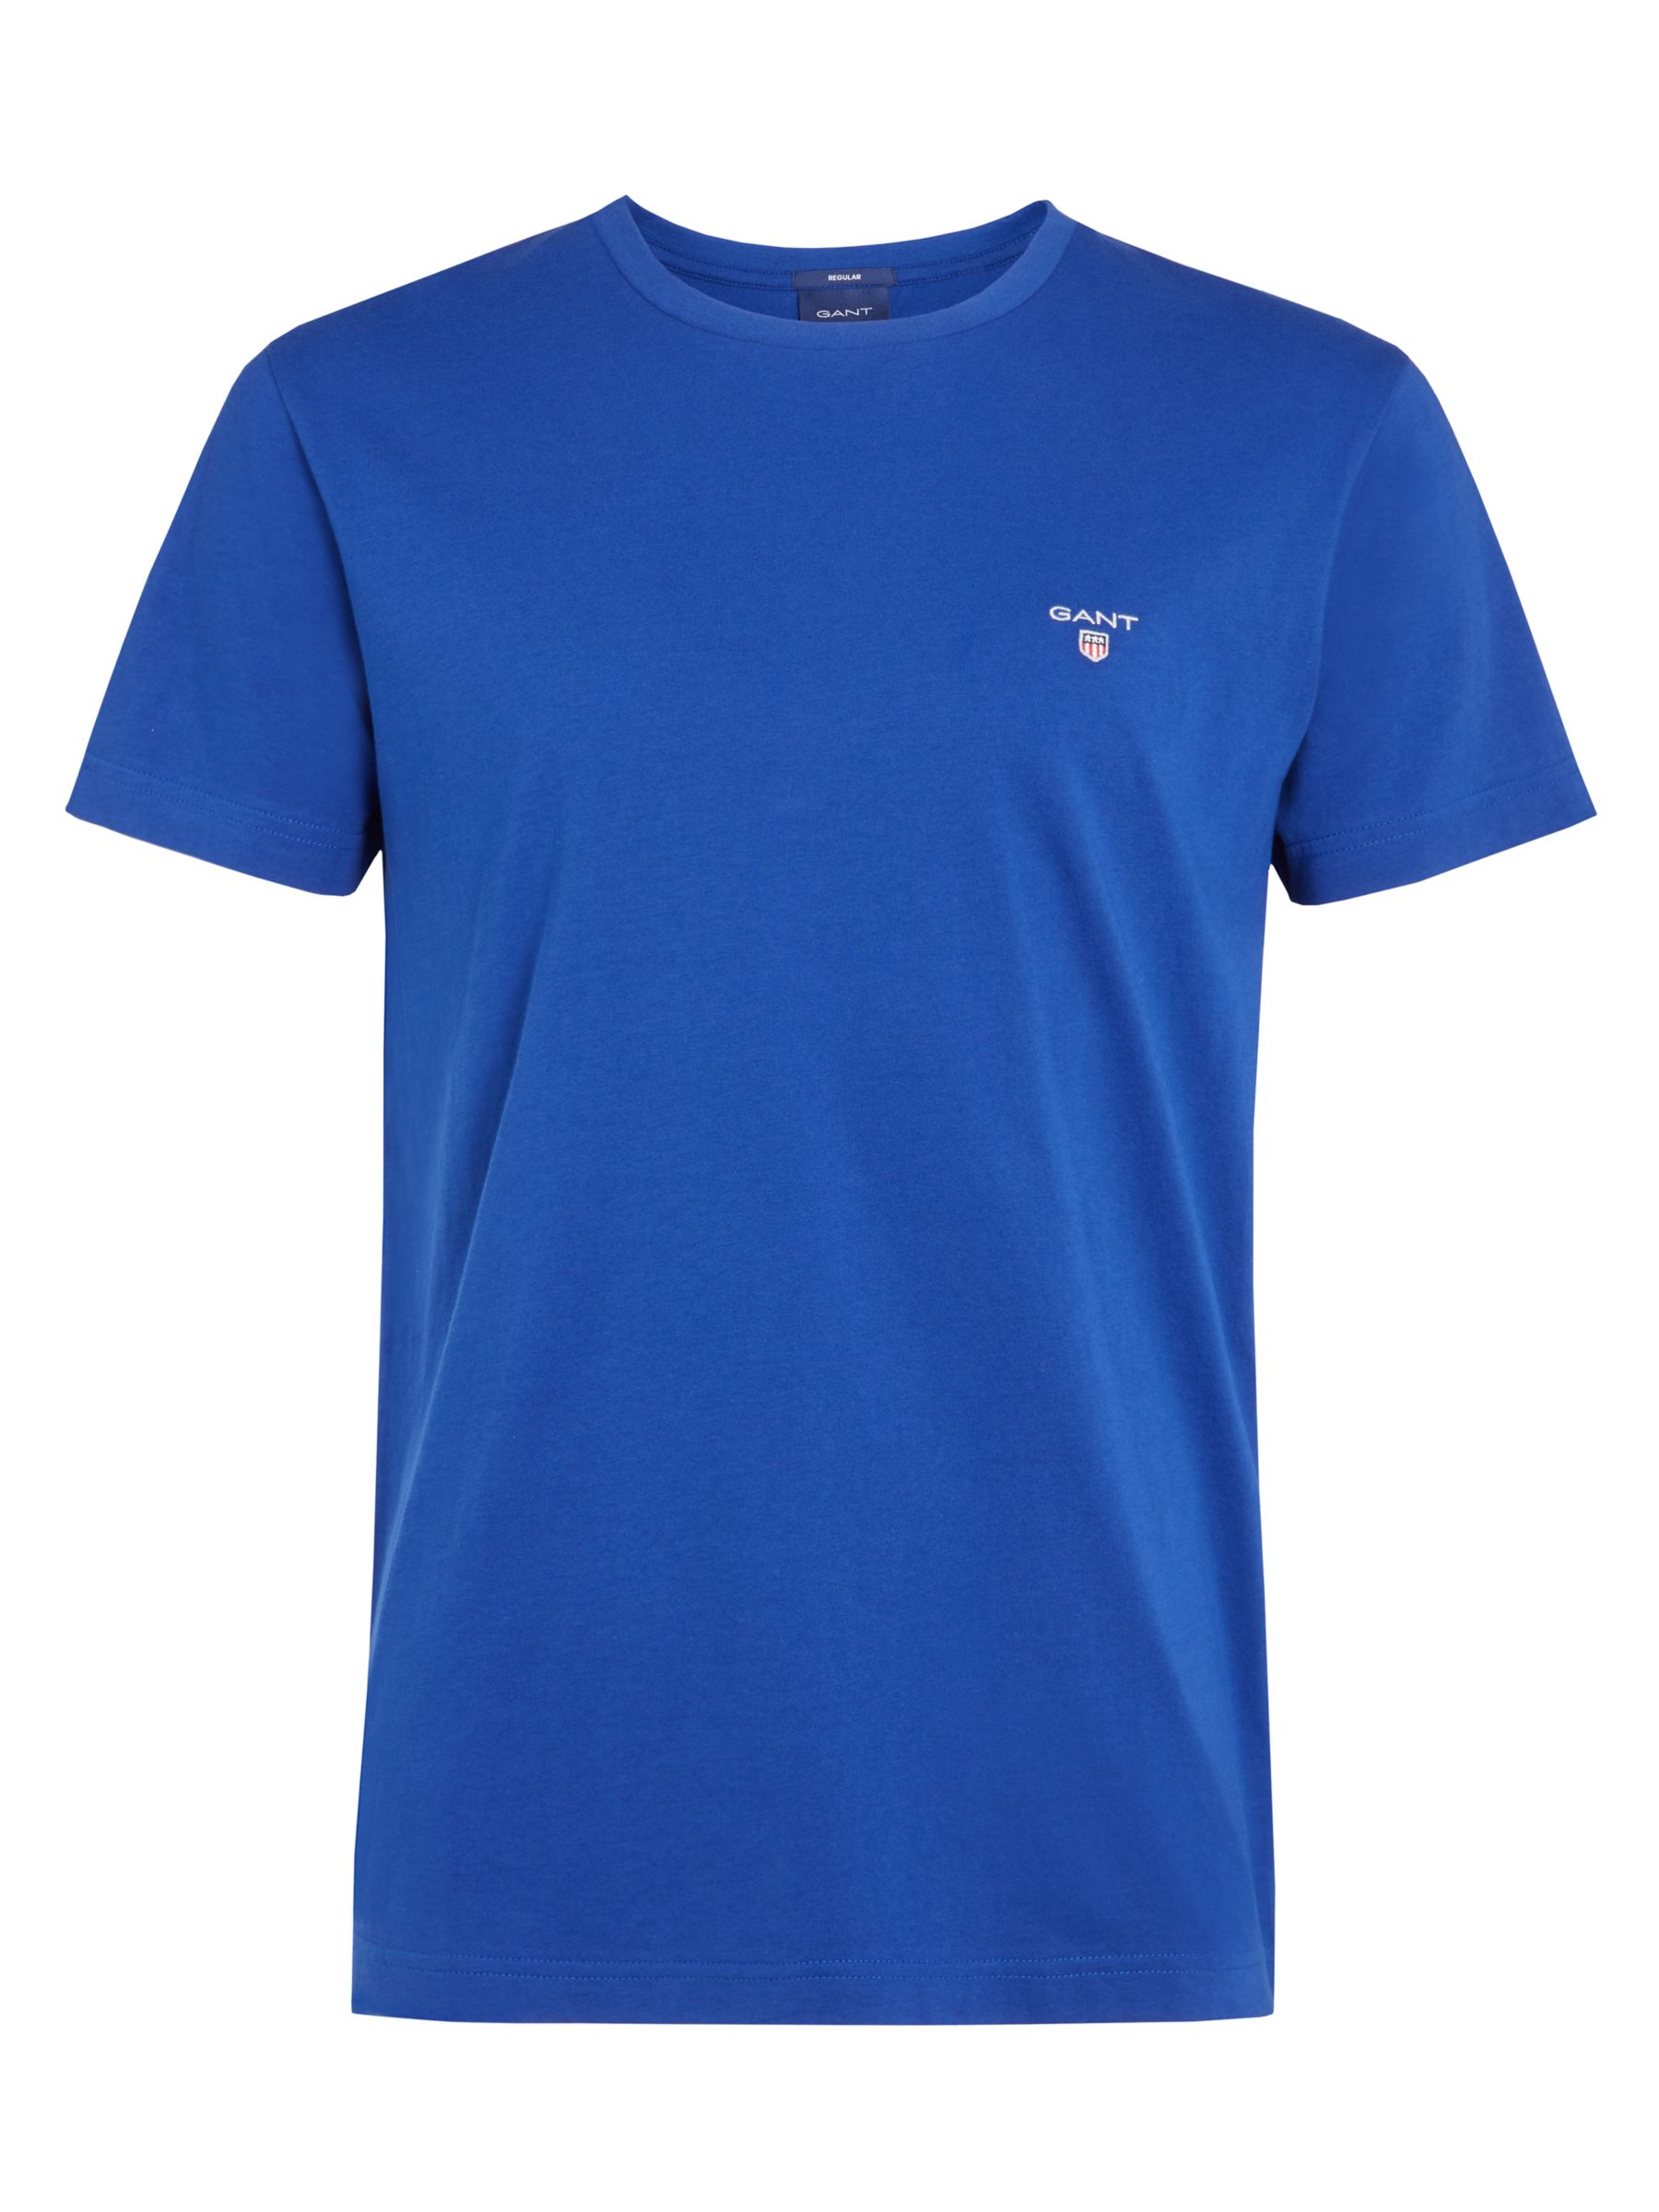 GANT Cotton Crew Neck T-Shirt, C435 Blue at John Lewis & Partners